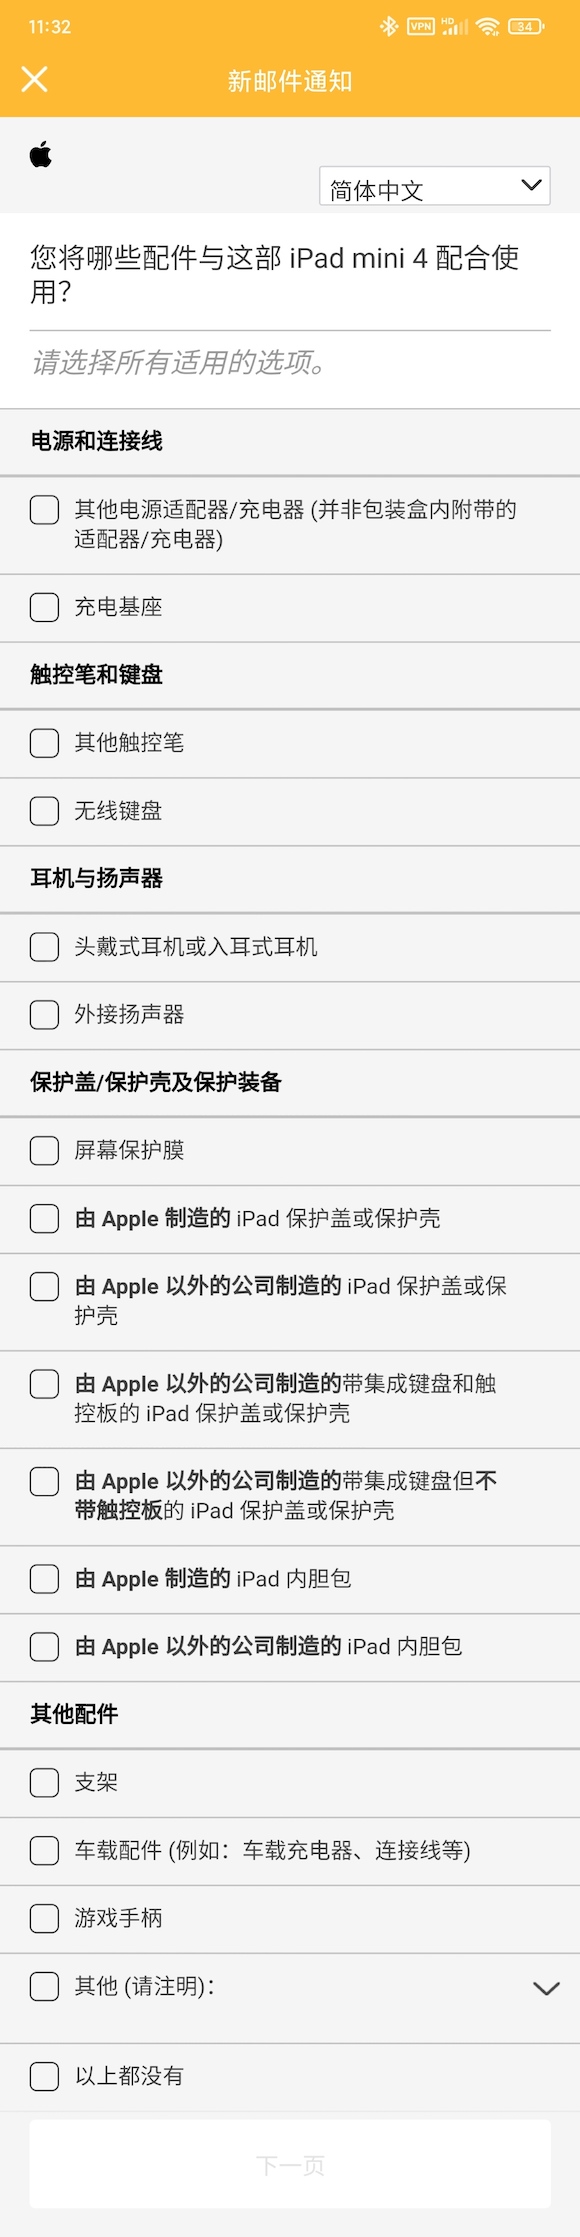 iPad mini 4 survey 4